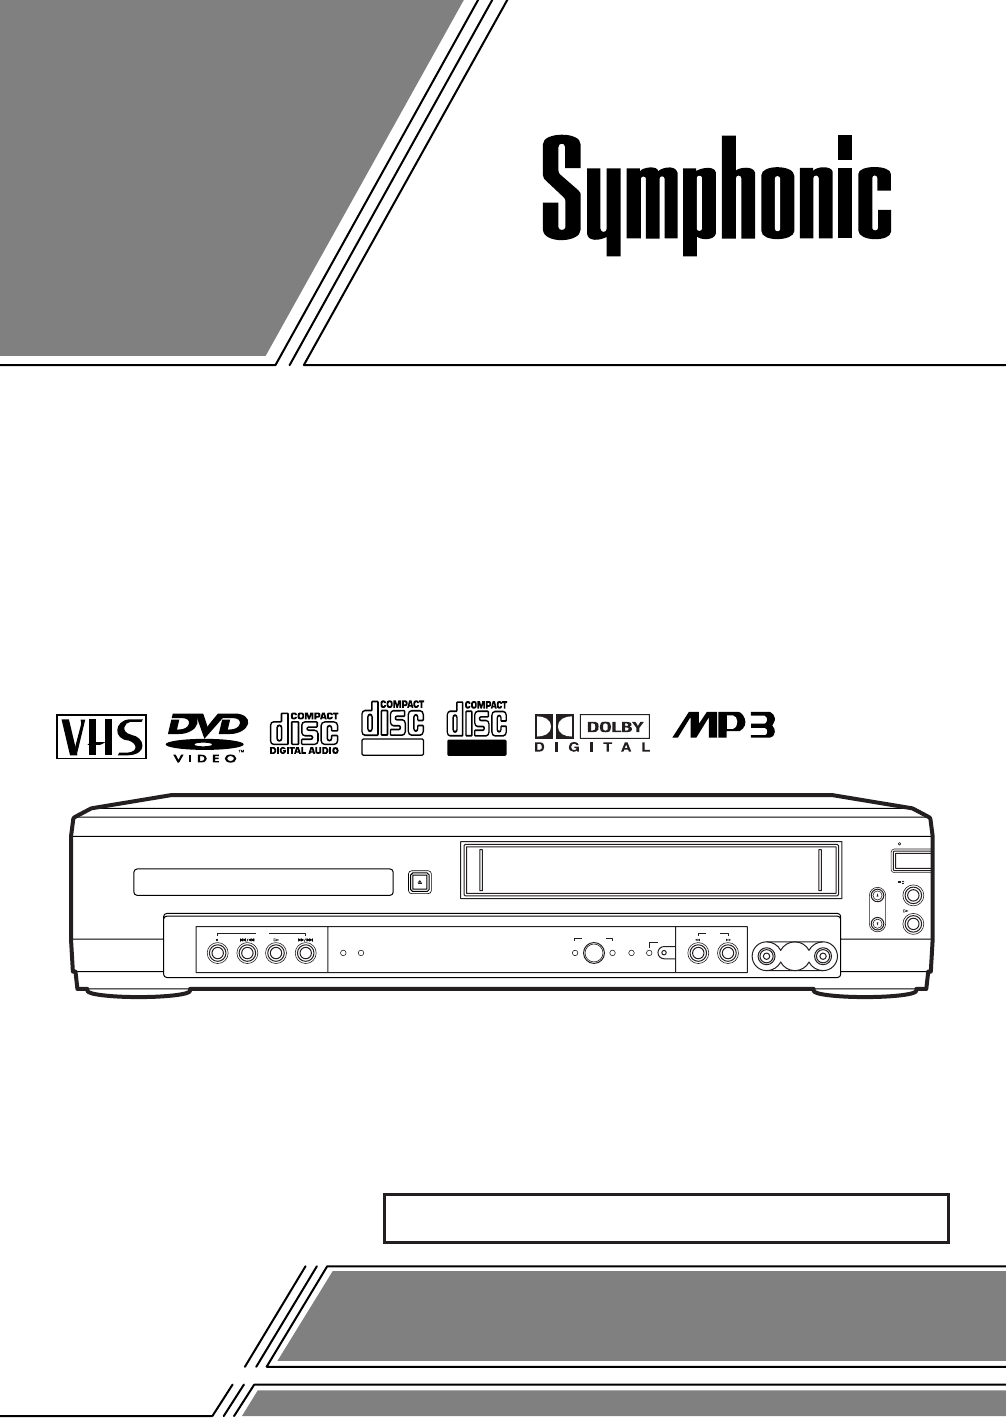 Symphonic video cassette recorder manual